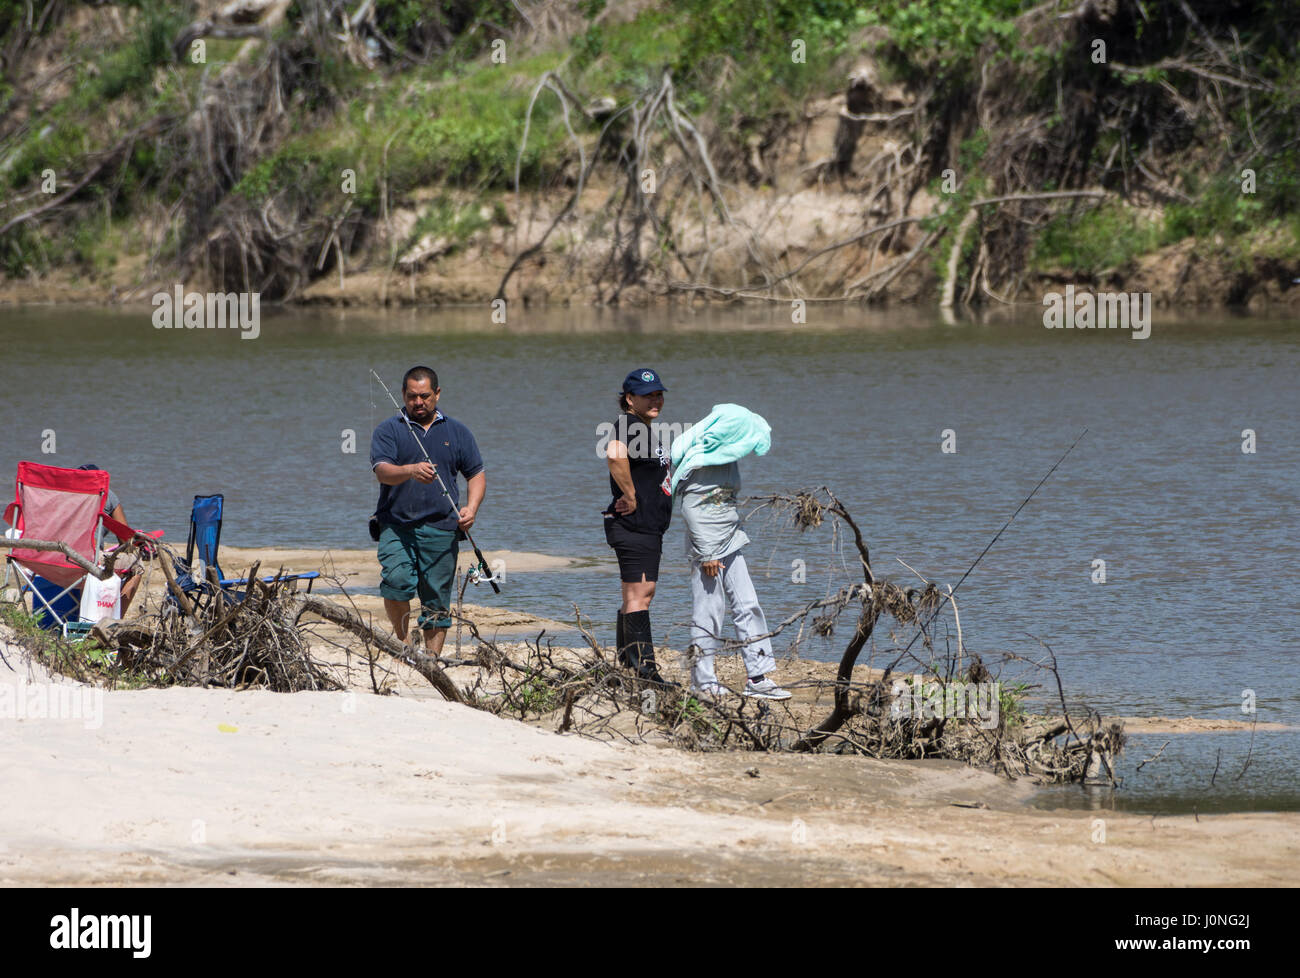 A Hispanic family fishing by a river. Texas, USA. Stock Photo